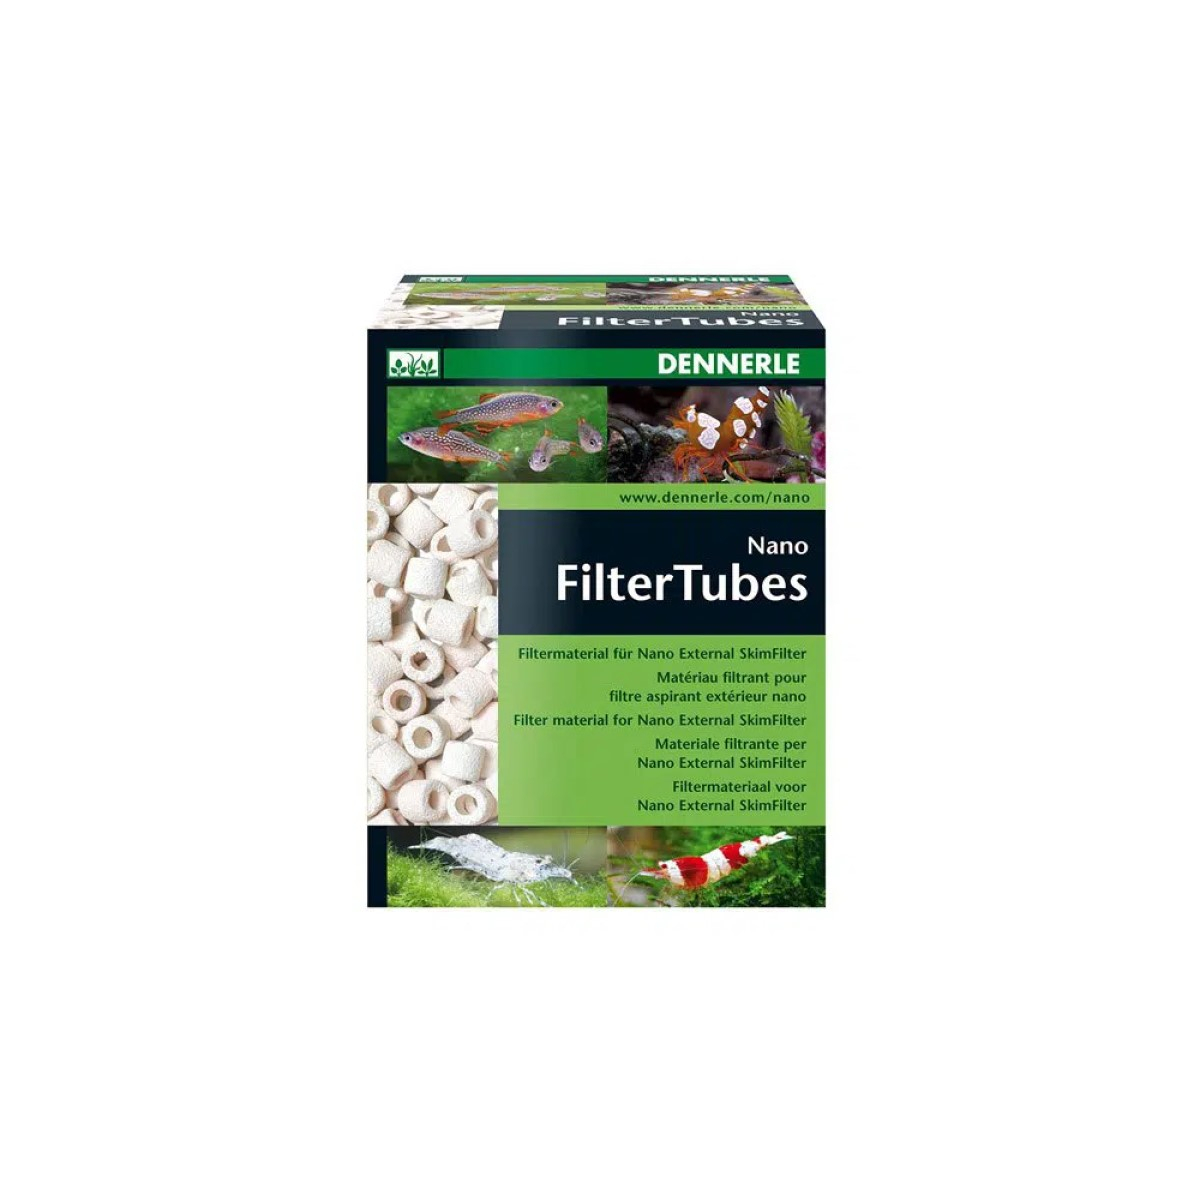 Dennerle Nano FilterTubes nouilles filtrantes